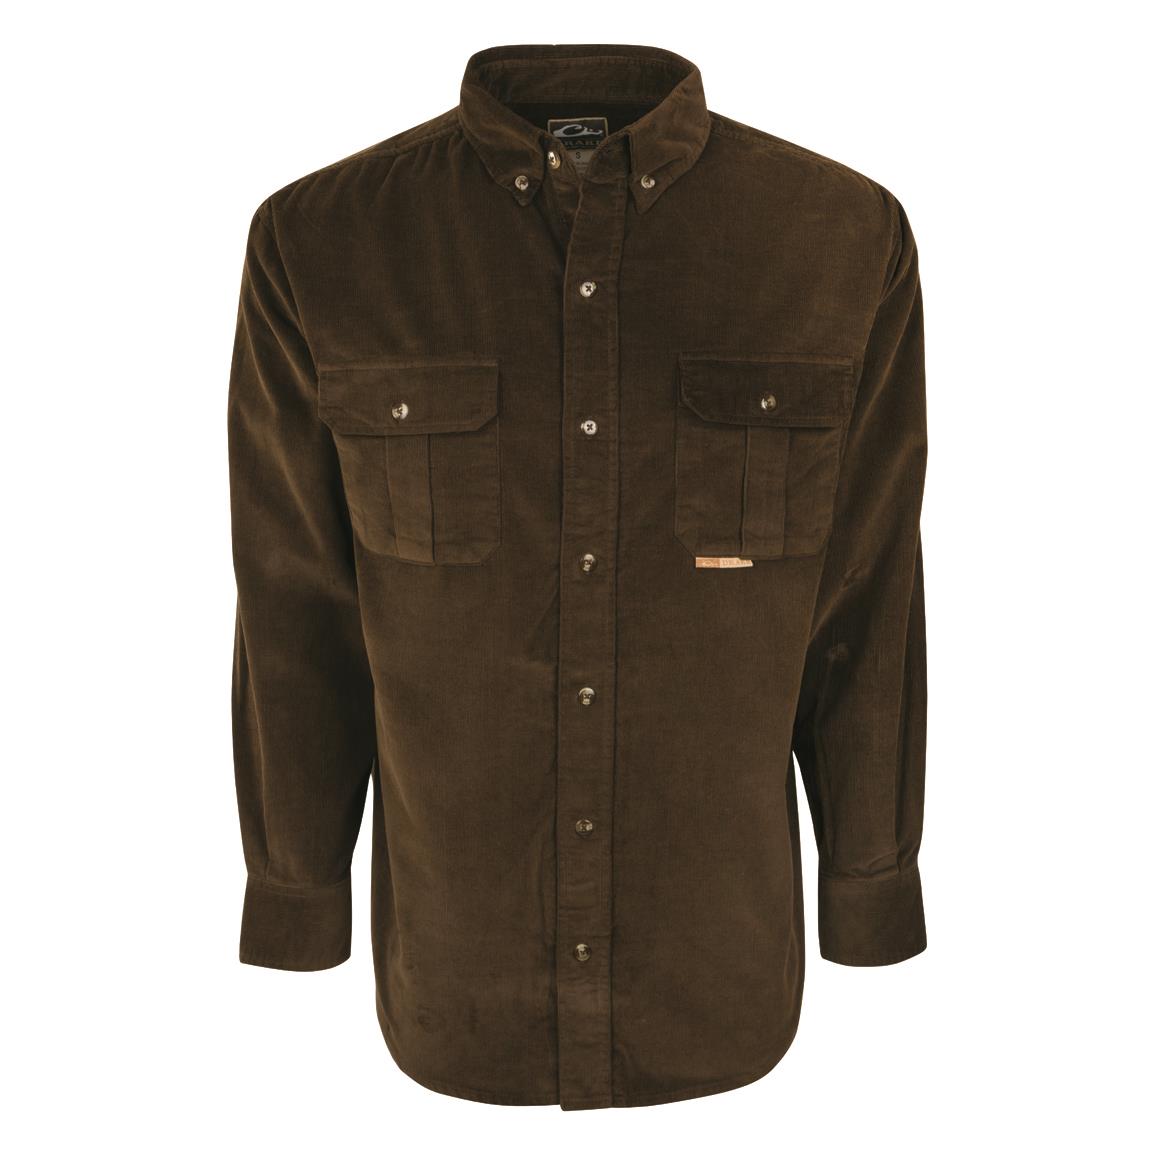 Drake Clothing Company Country Corduroy Long-Sleeve Shirt, Brown